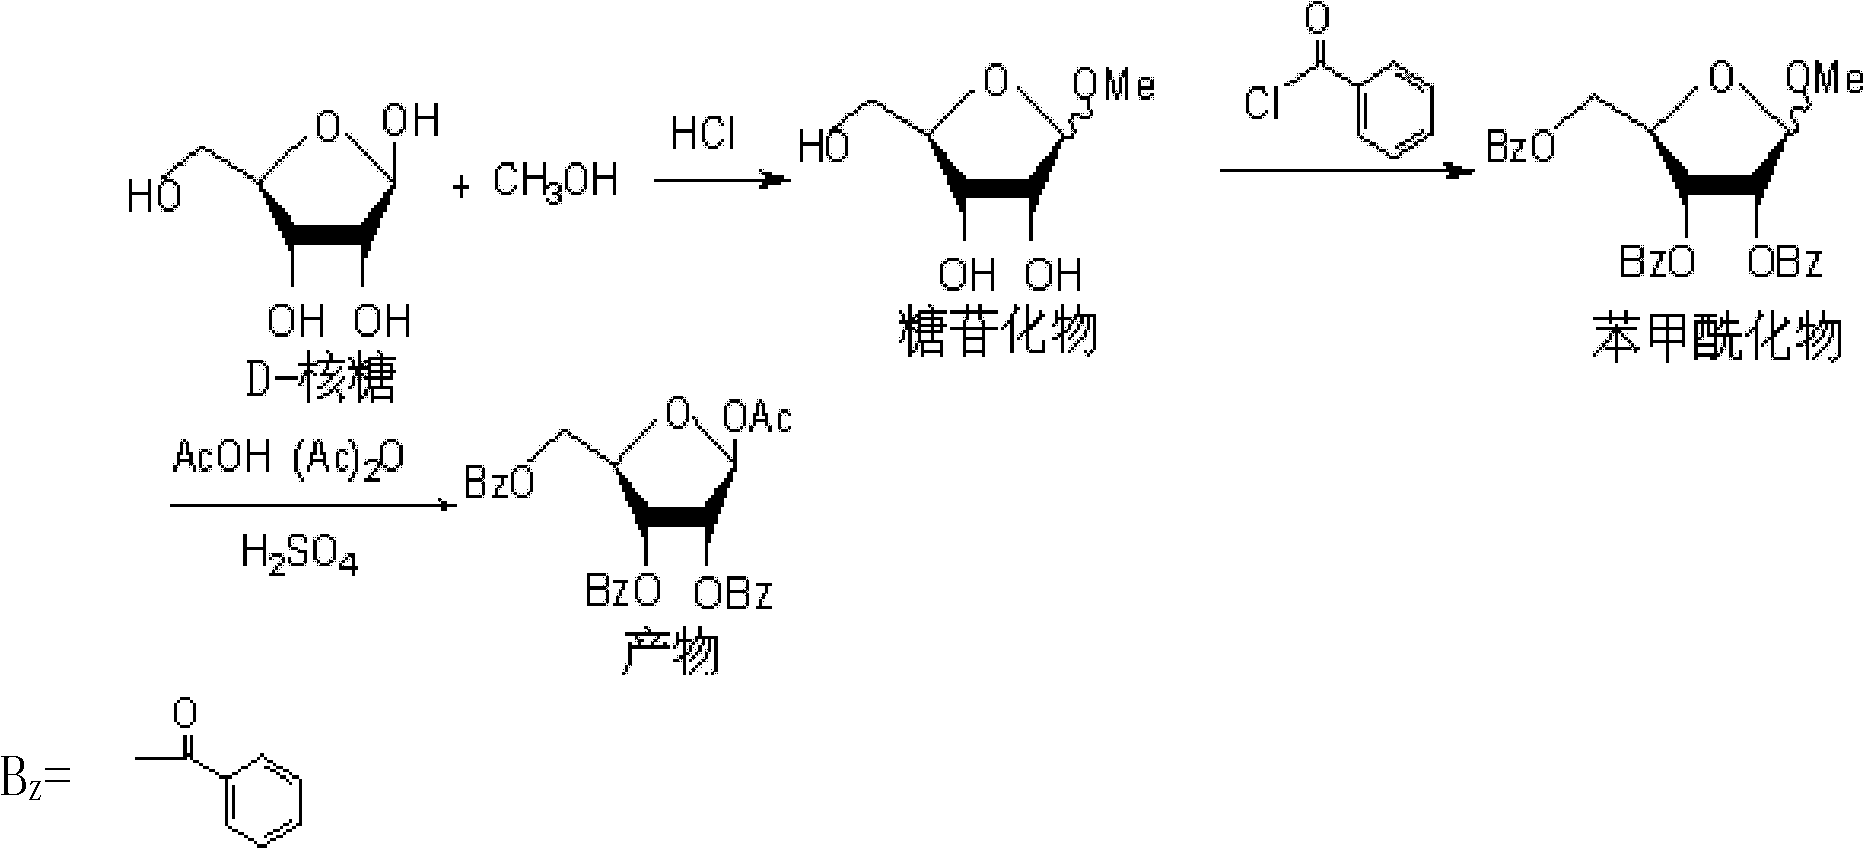 Preparation technology of 1-O-acetyl-2,3,5-tri-O-benzoyl-beta-D-ribofuranose